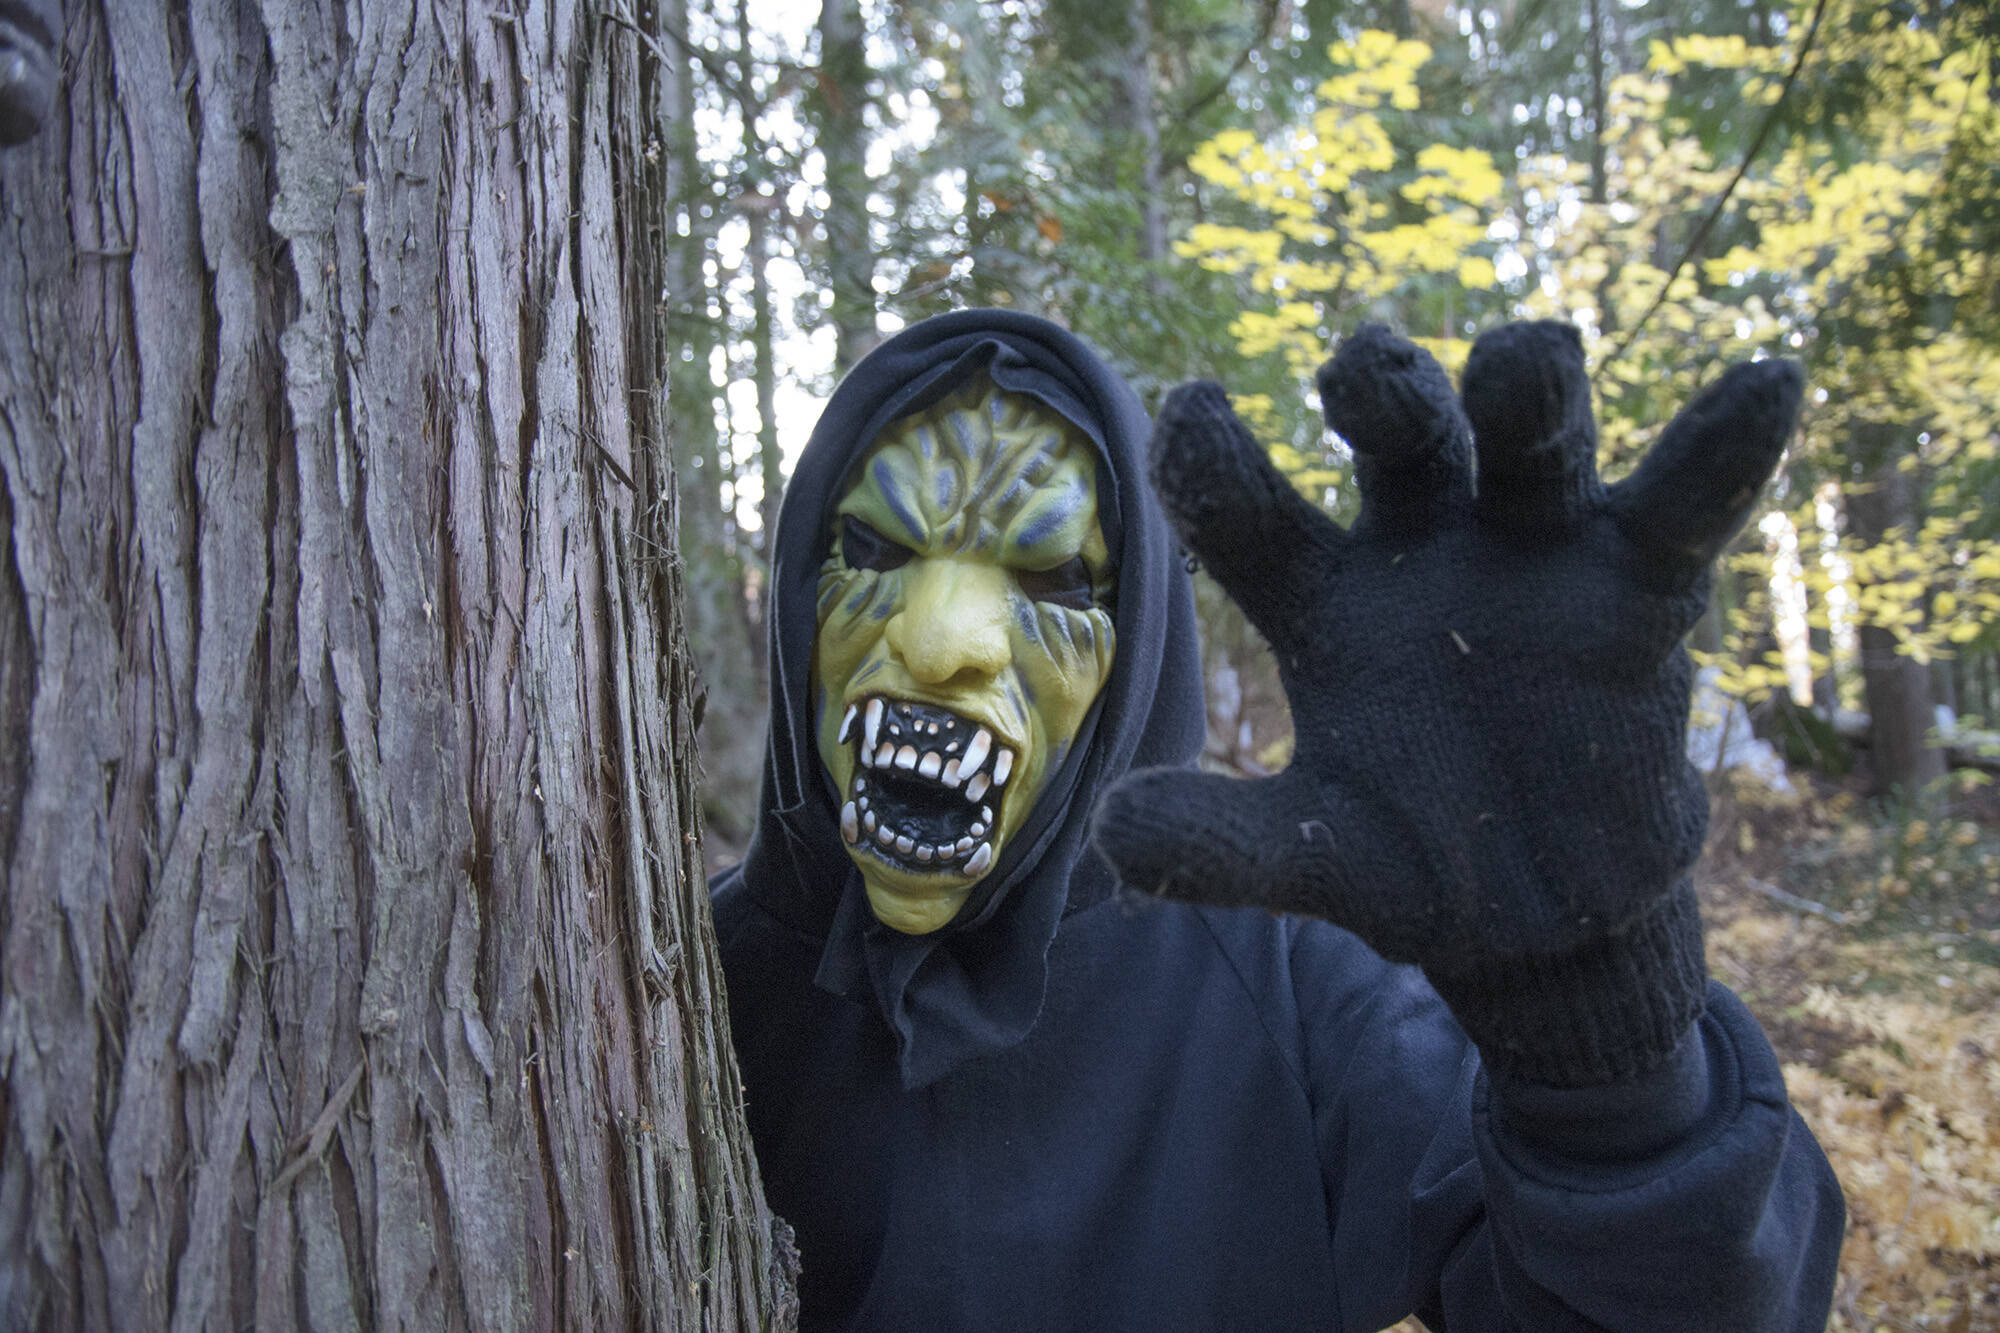 Spooktacular Halloween haunt creeping up in Salmon Arm - Vernon